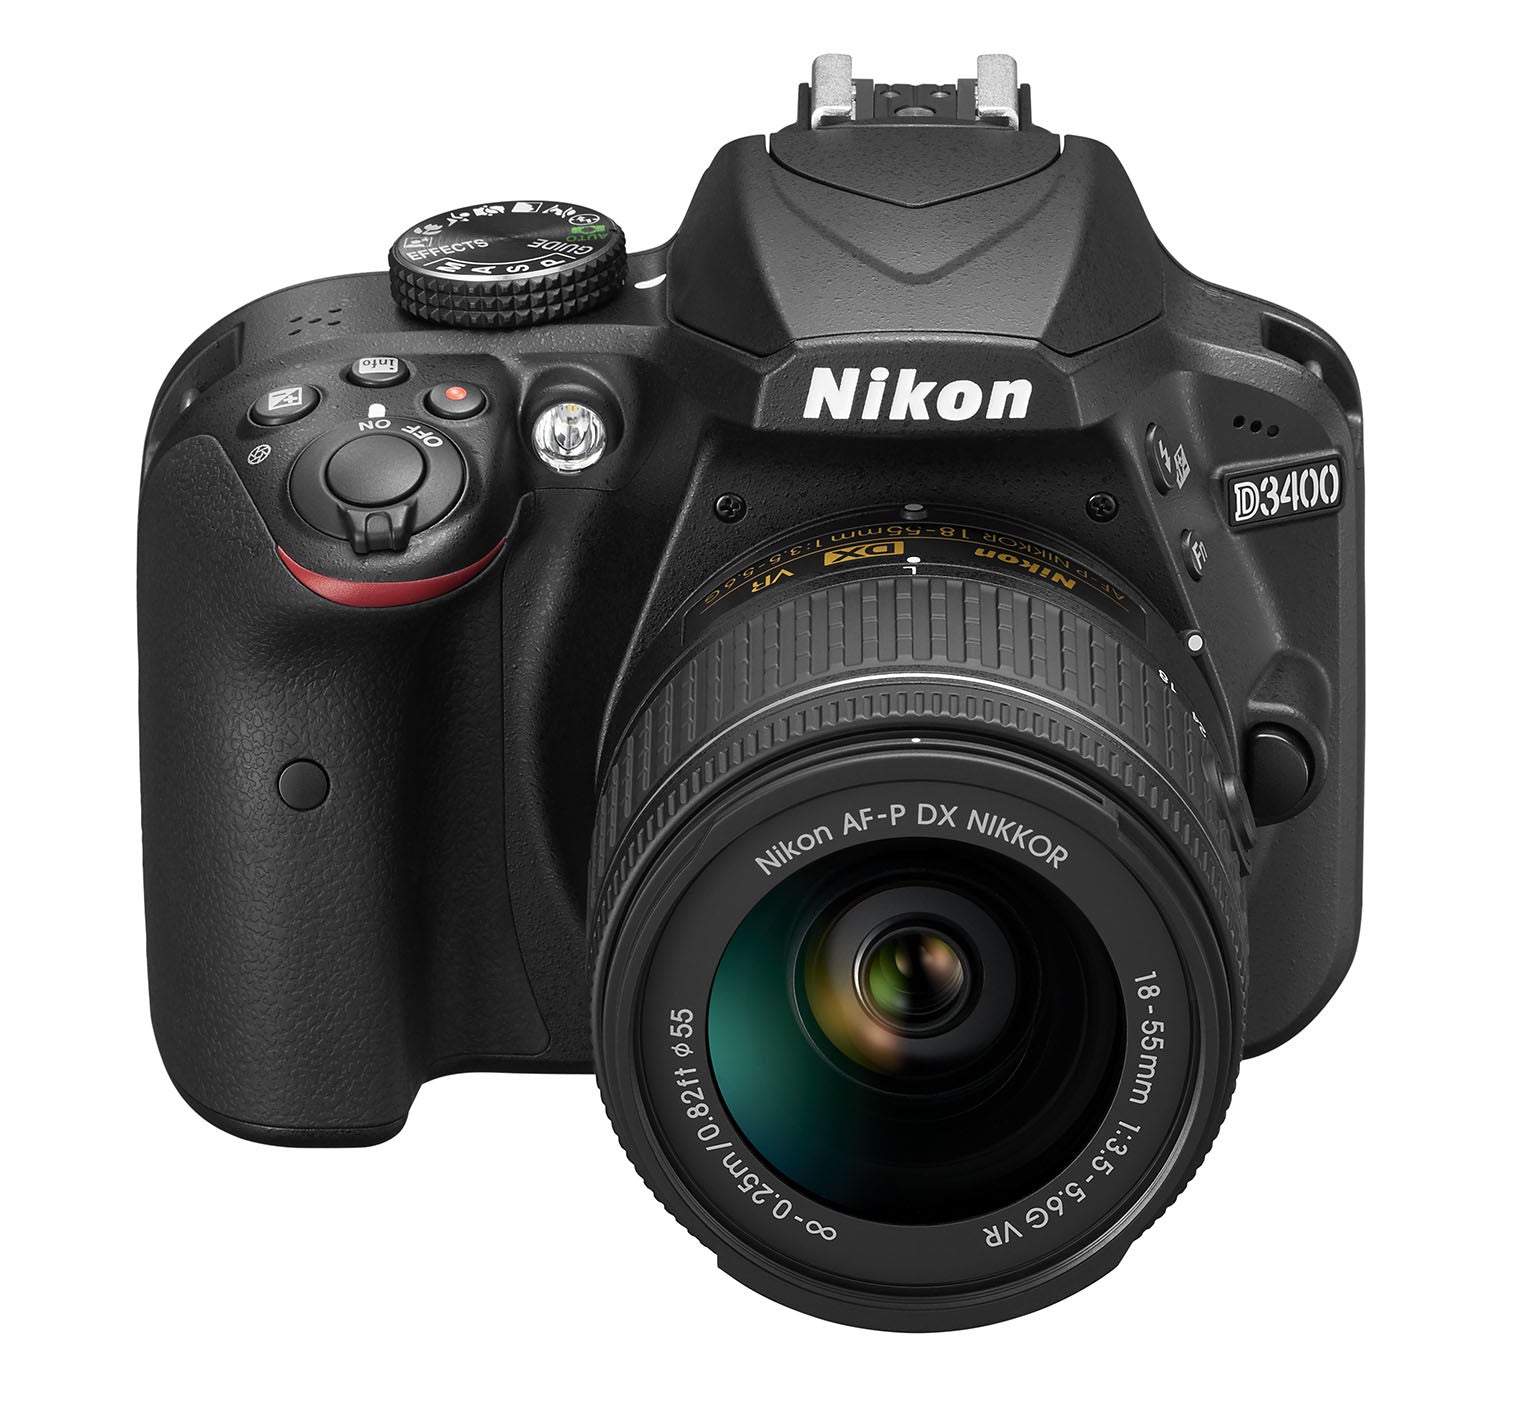 Nikon D3400 Digital SLR Camera 2 Lens Kit (18-55mm 70-300mm), camera dslr cameras, Nikon - Pictureline  - 5